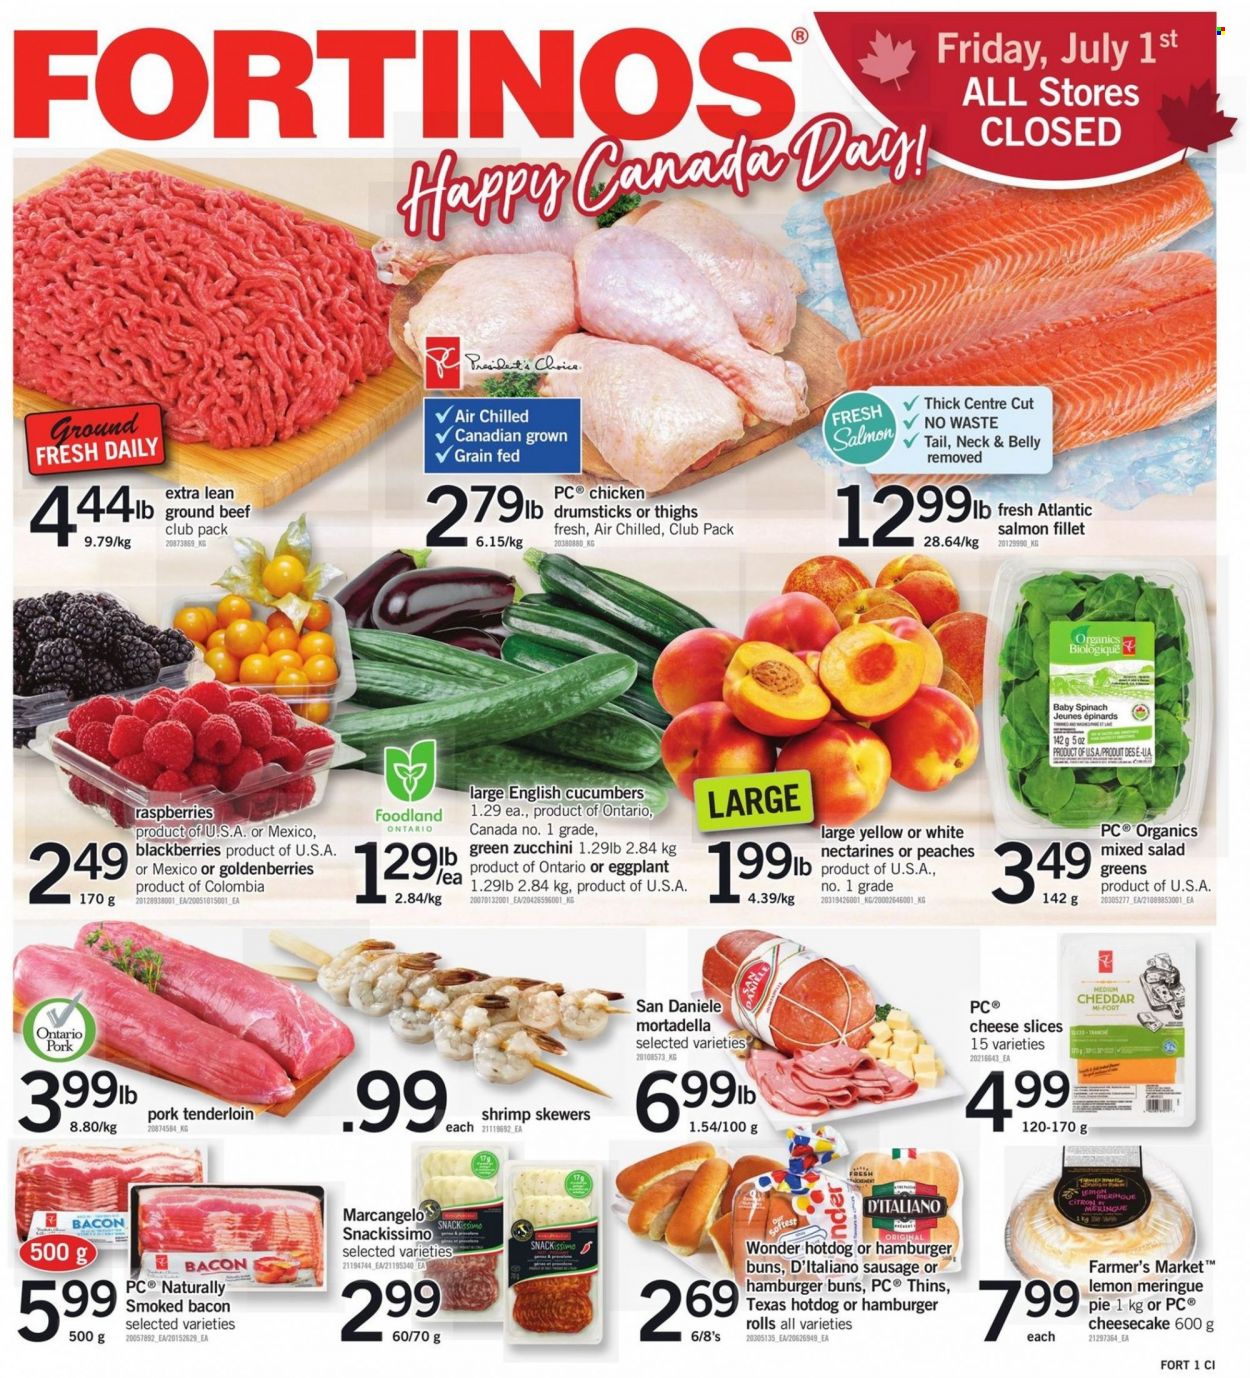 thumbnail - Circulaire Fortinos - 23 Juin 2022 - 29 Juin 2022 - Produits soldés - meringue, épinard, citron, nectarine, mortadella, bacon, Président. Page 1.